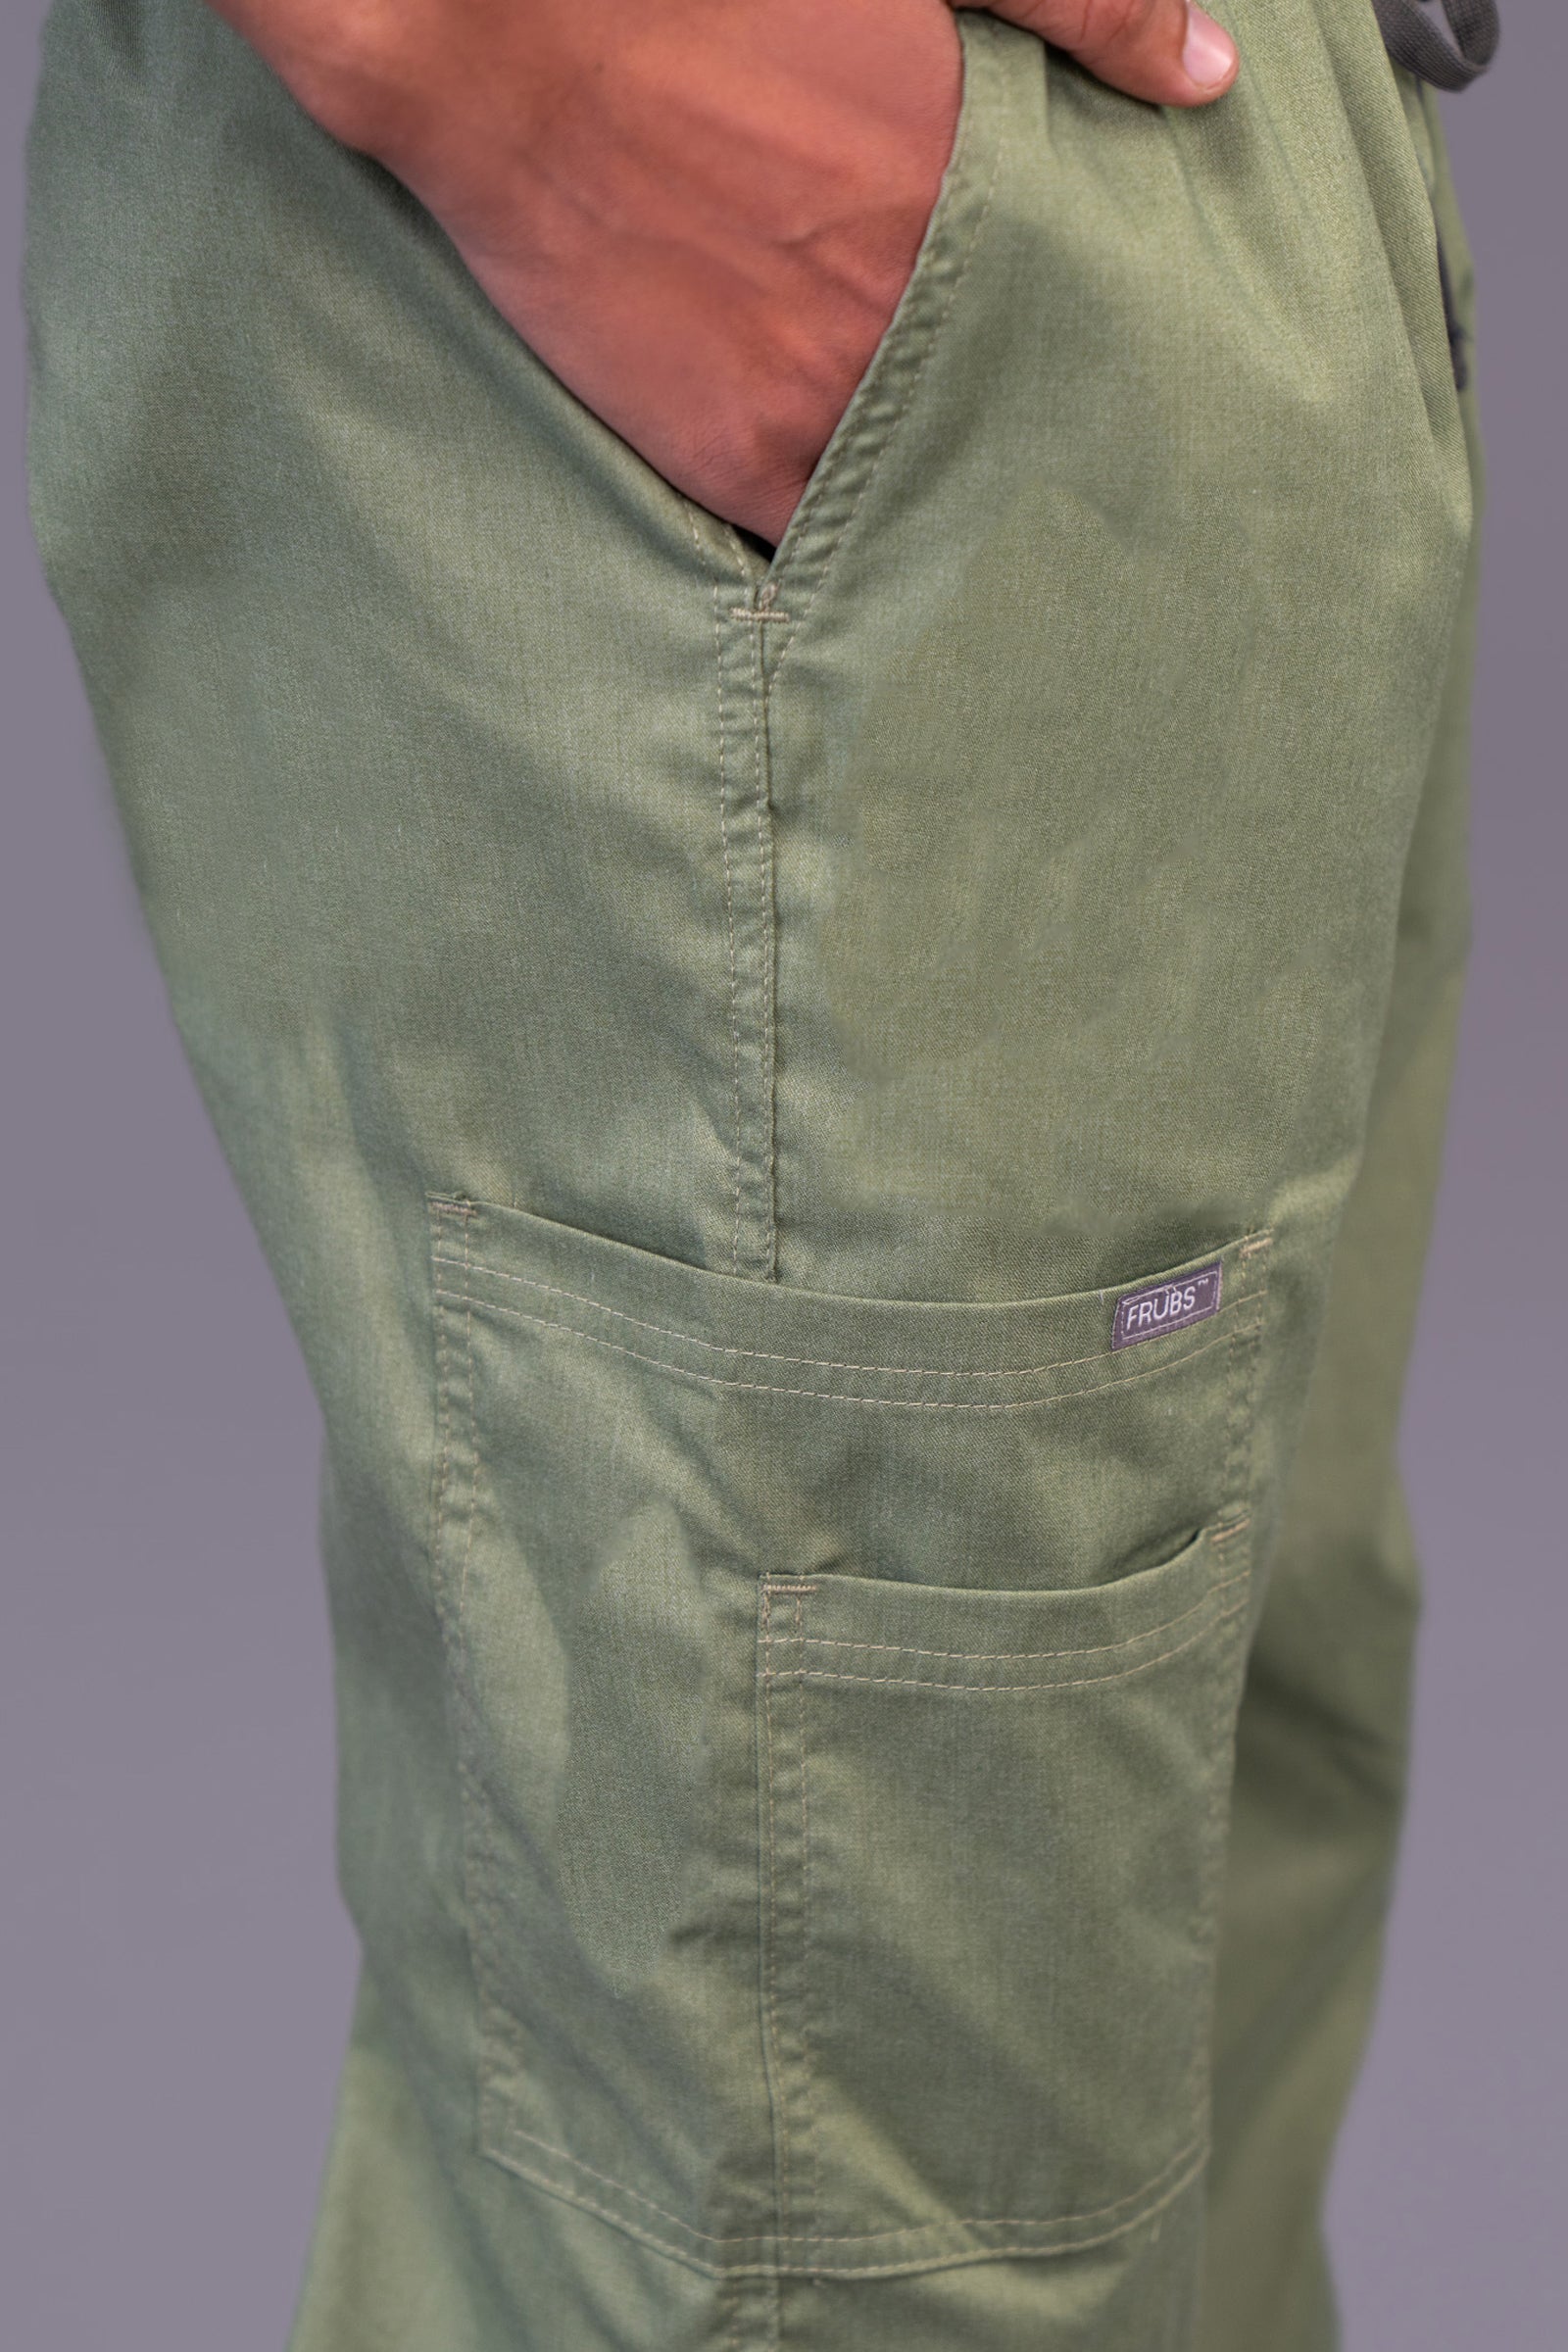 Moss Green unisex trousers